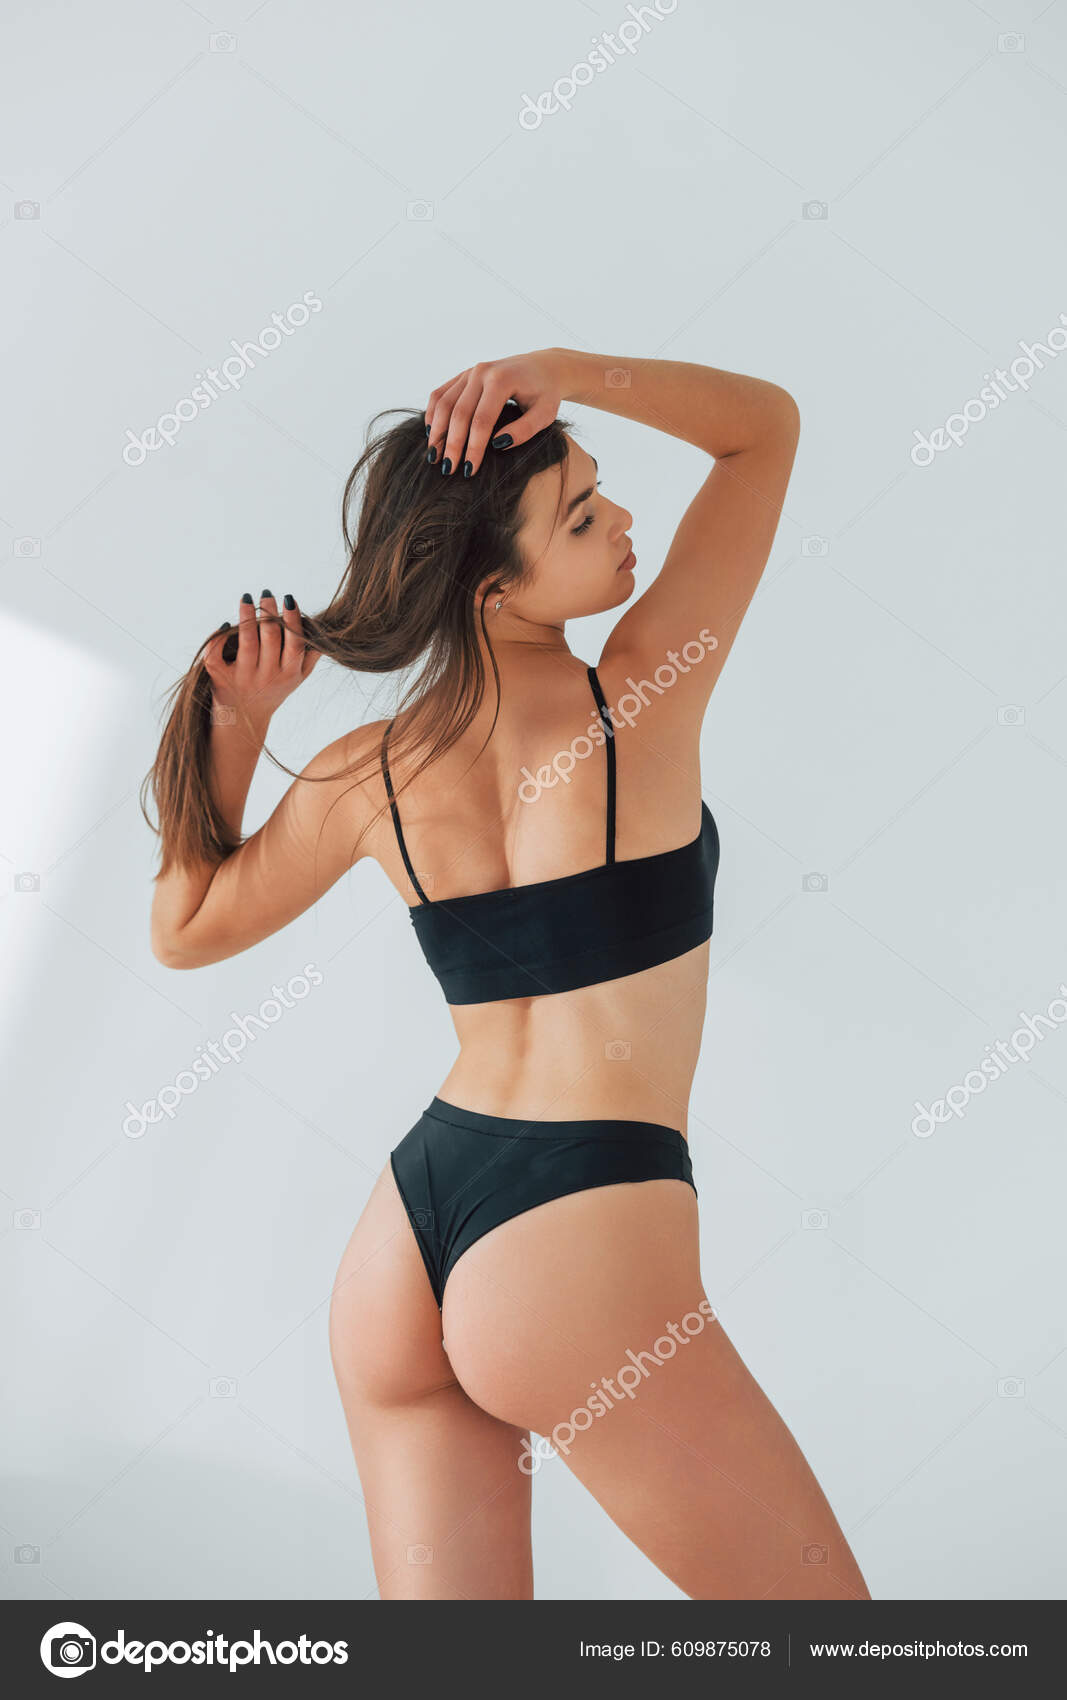 Showing Body Beautiful Woman Underwear Posing Indoors Stock Photo